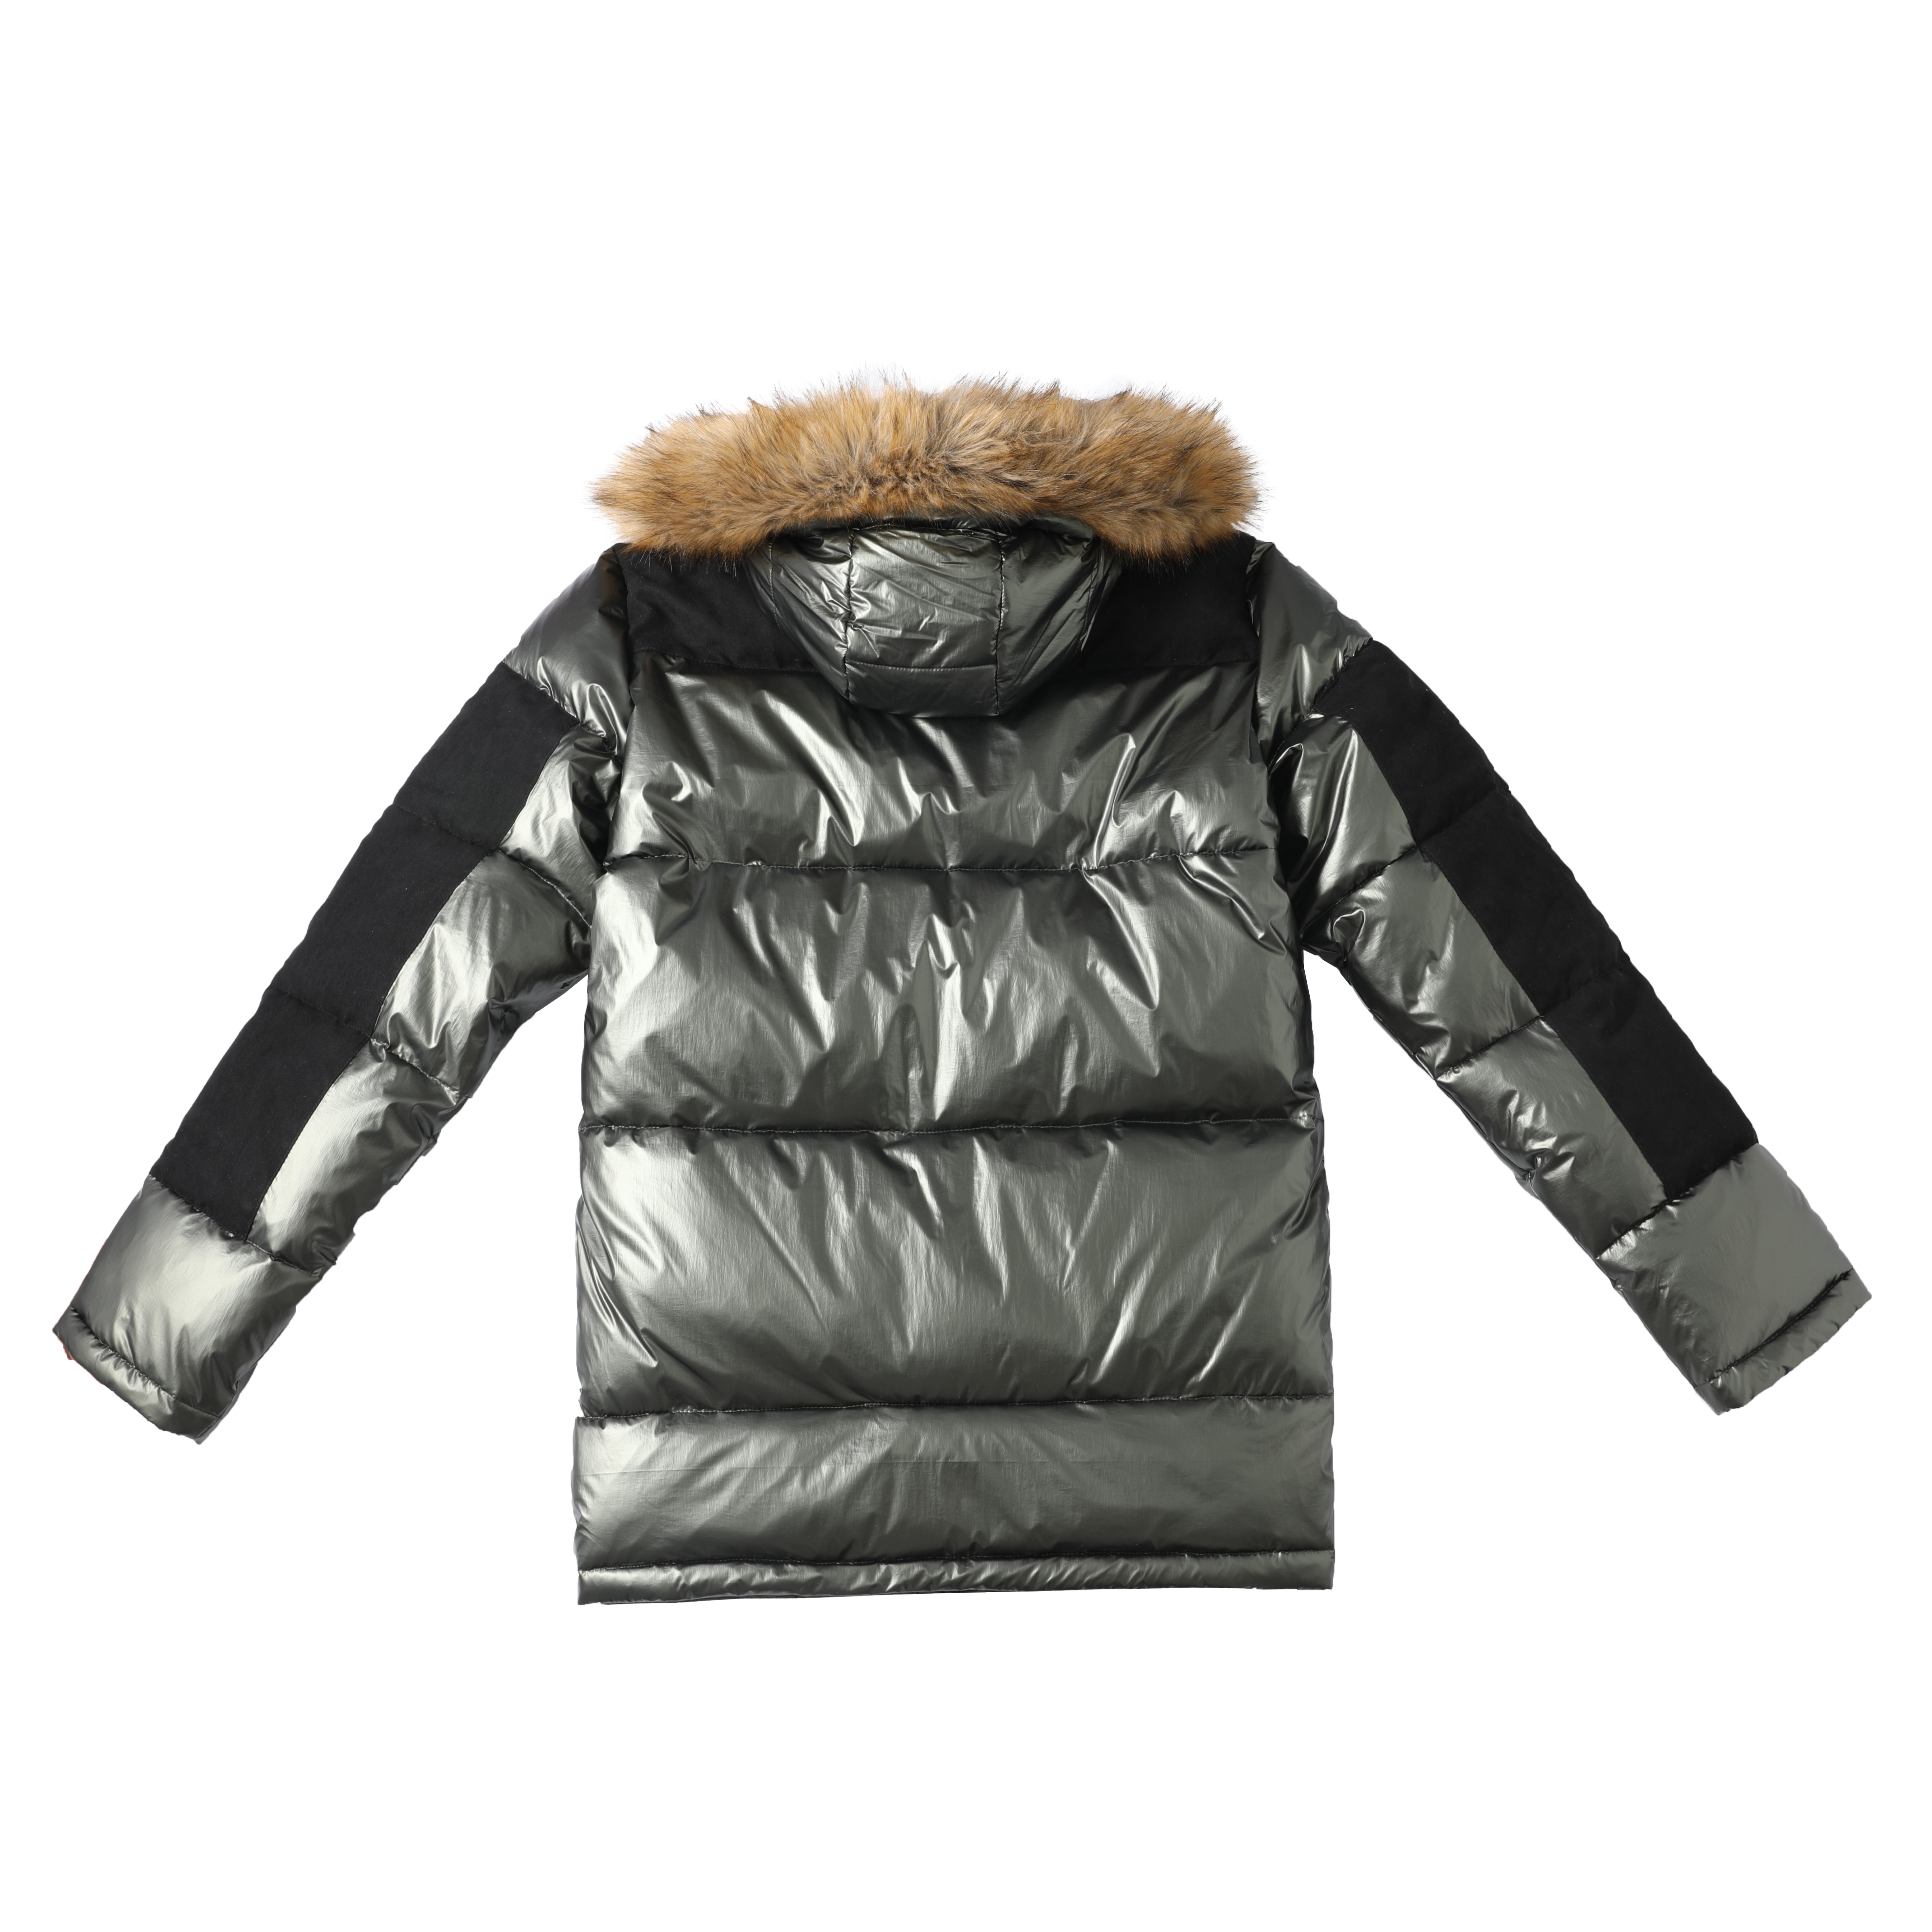 Reflect light fabric Men's Winter Parka Jacket With Fur Hood